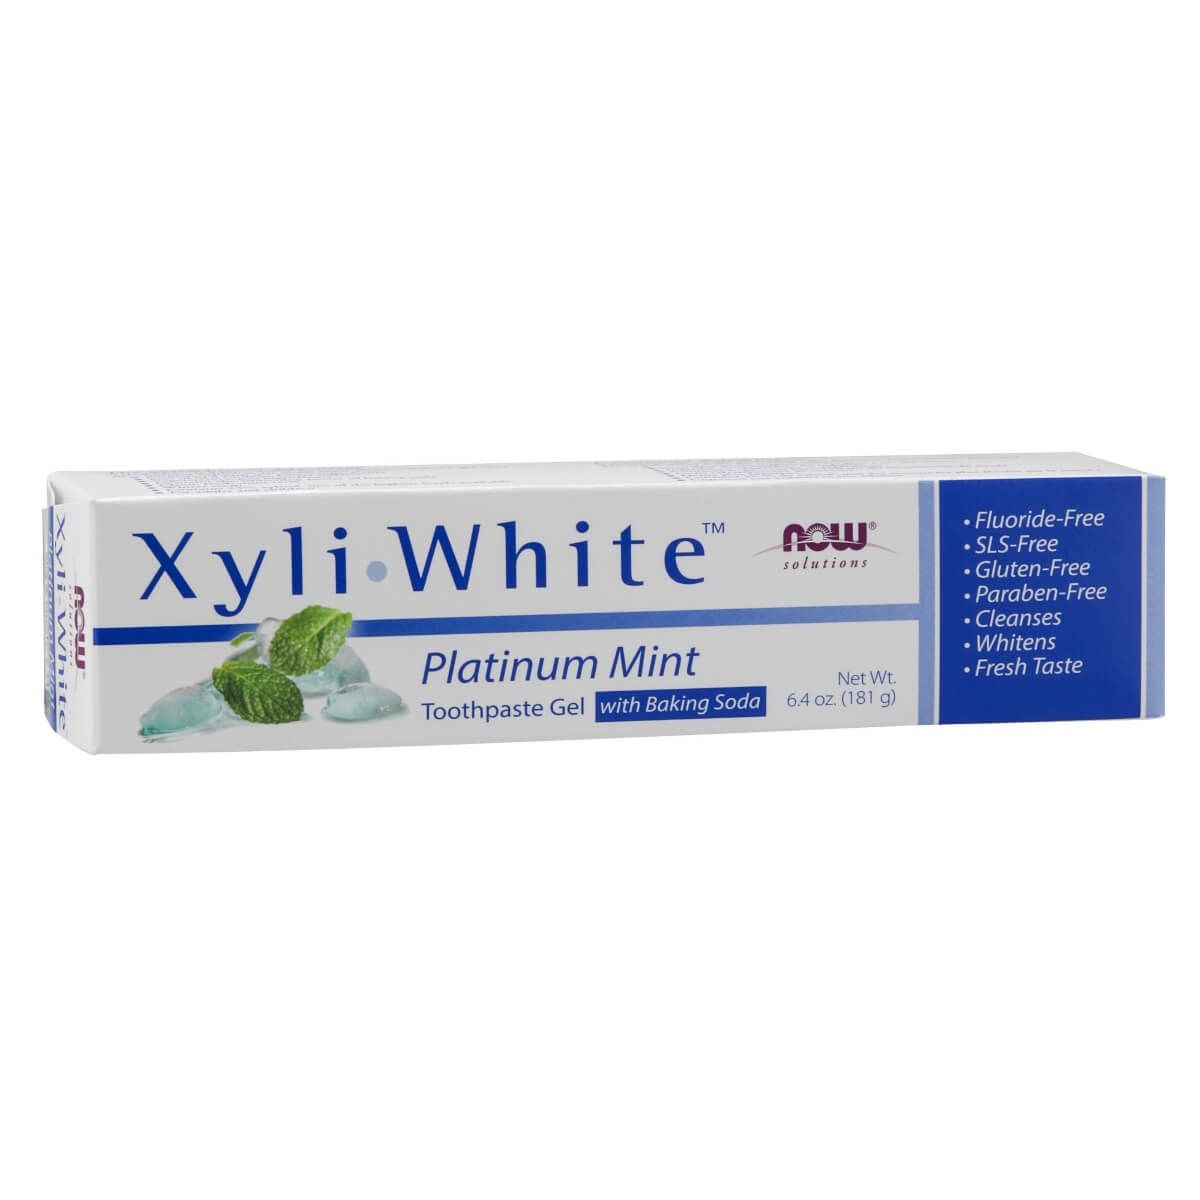 Photos - Vitamins & Minerals Now Foods Xyliwhite Toothpaste Gel Platinum Mint 6.4oz PBW-P30764 